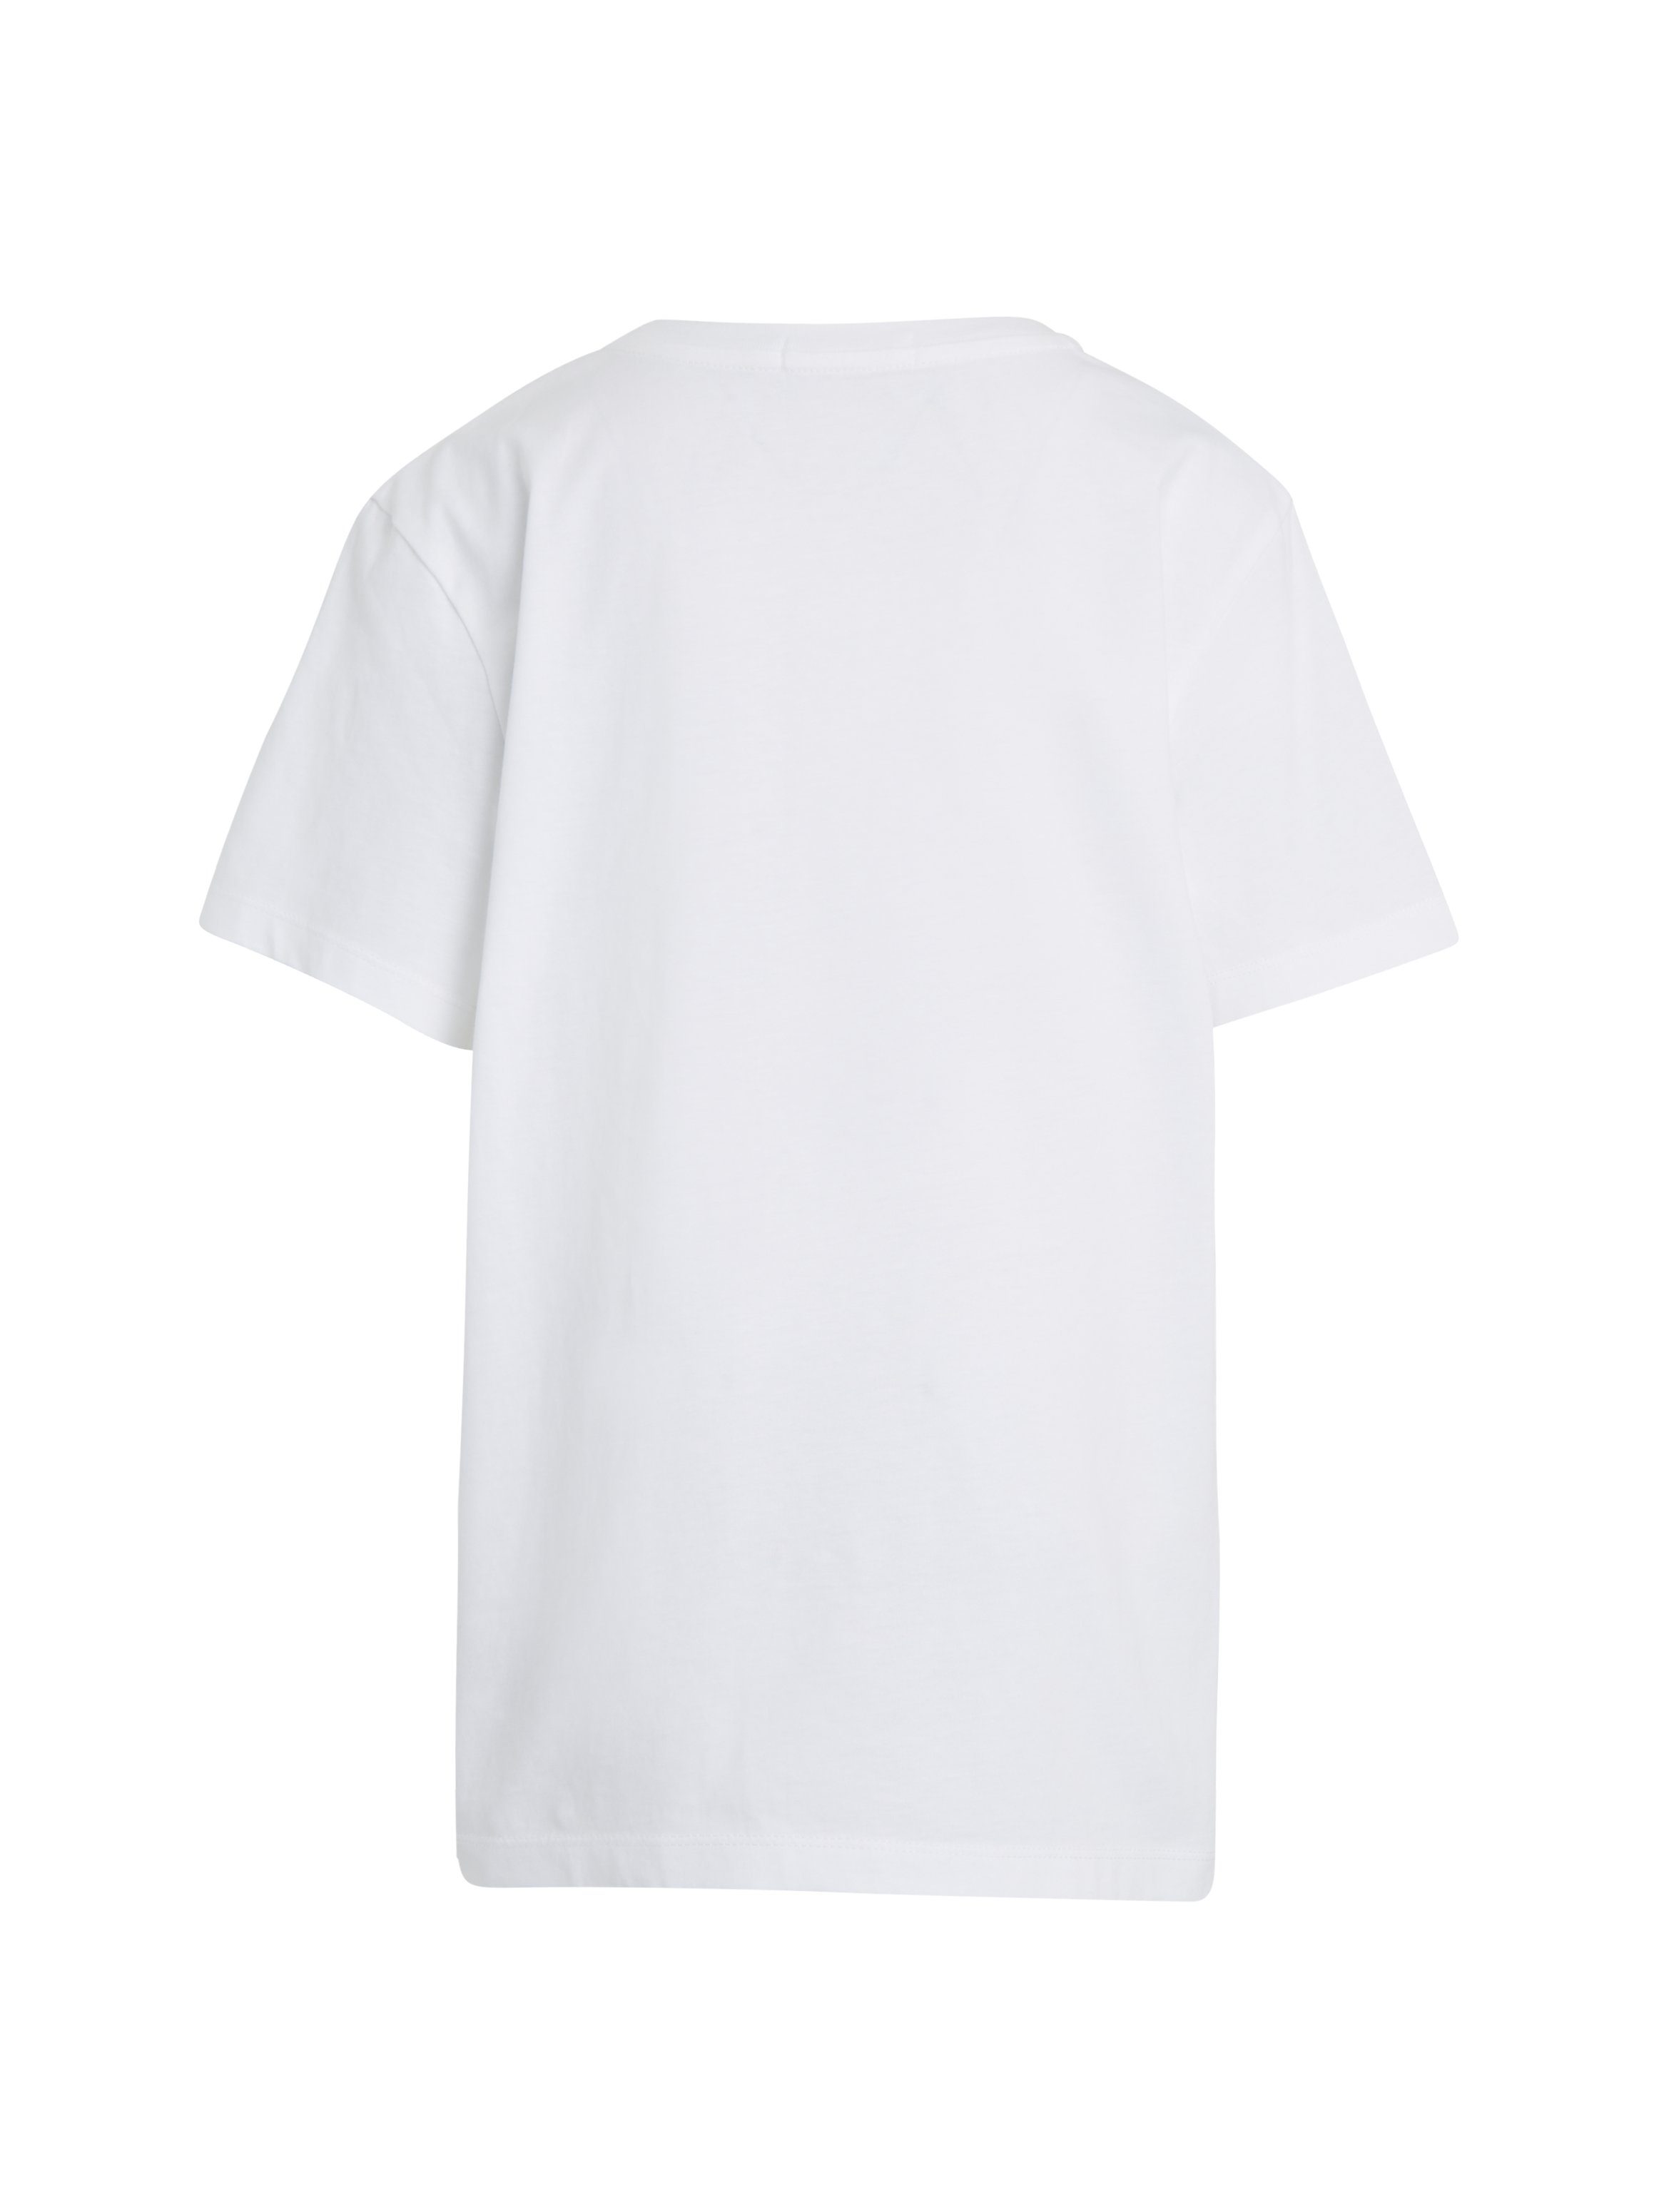 Calvin Klein TOP White MONOGRAM Jeans Bright CHEST T-Shirt